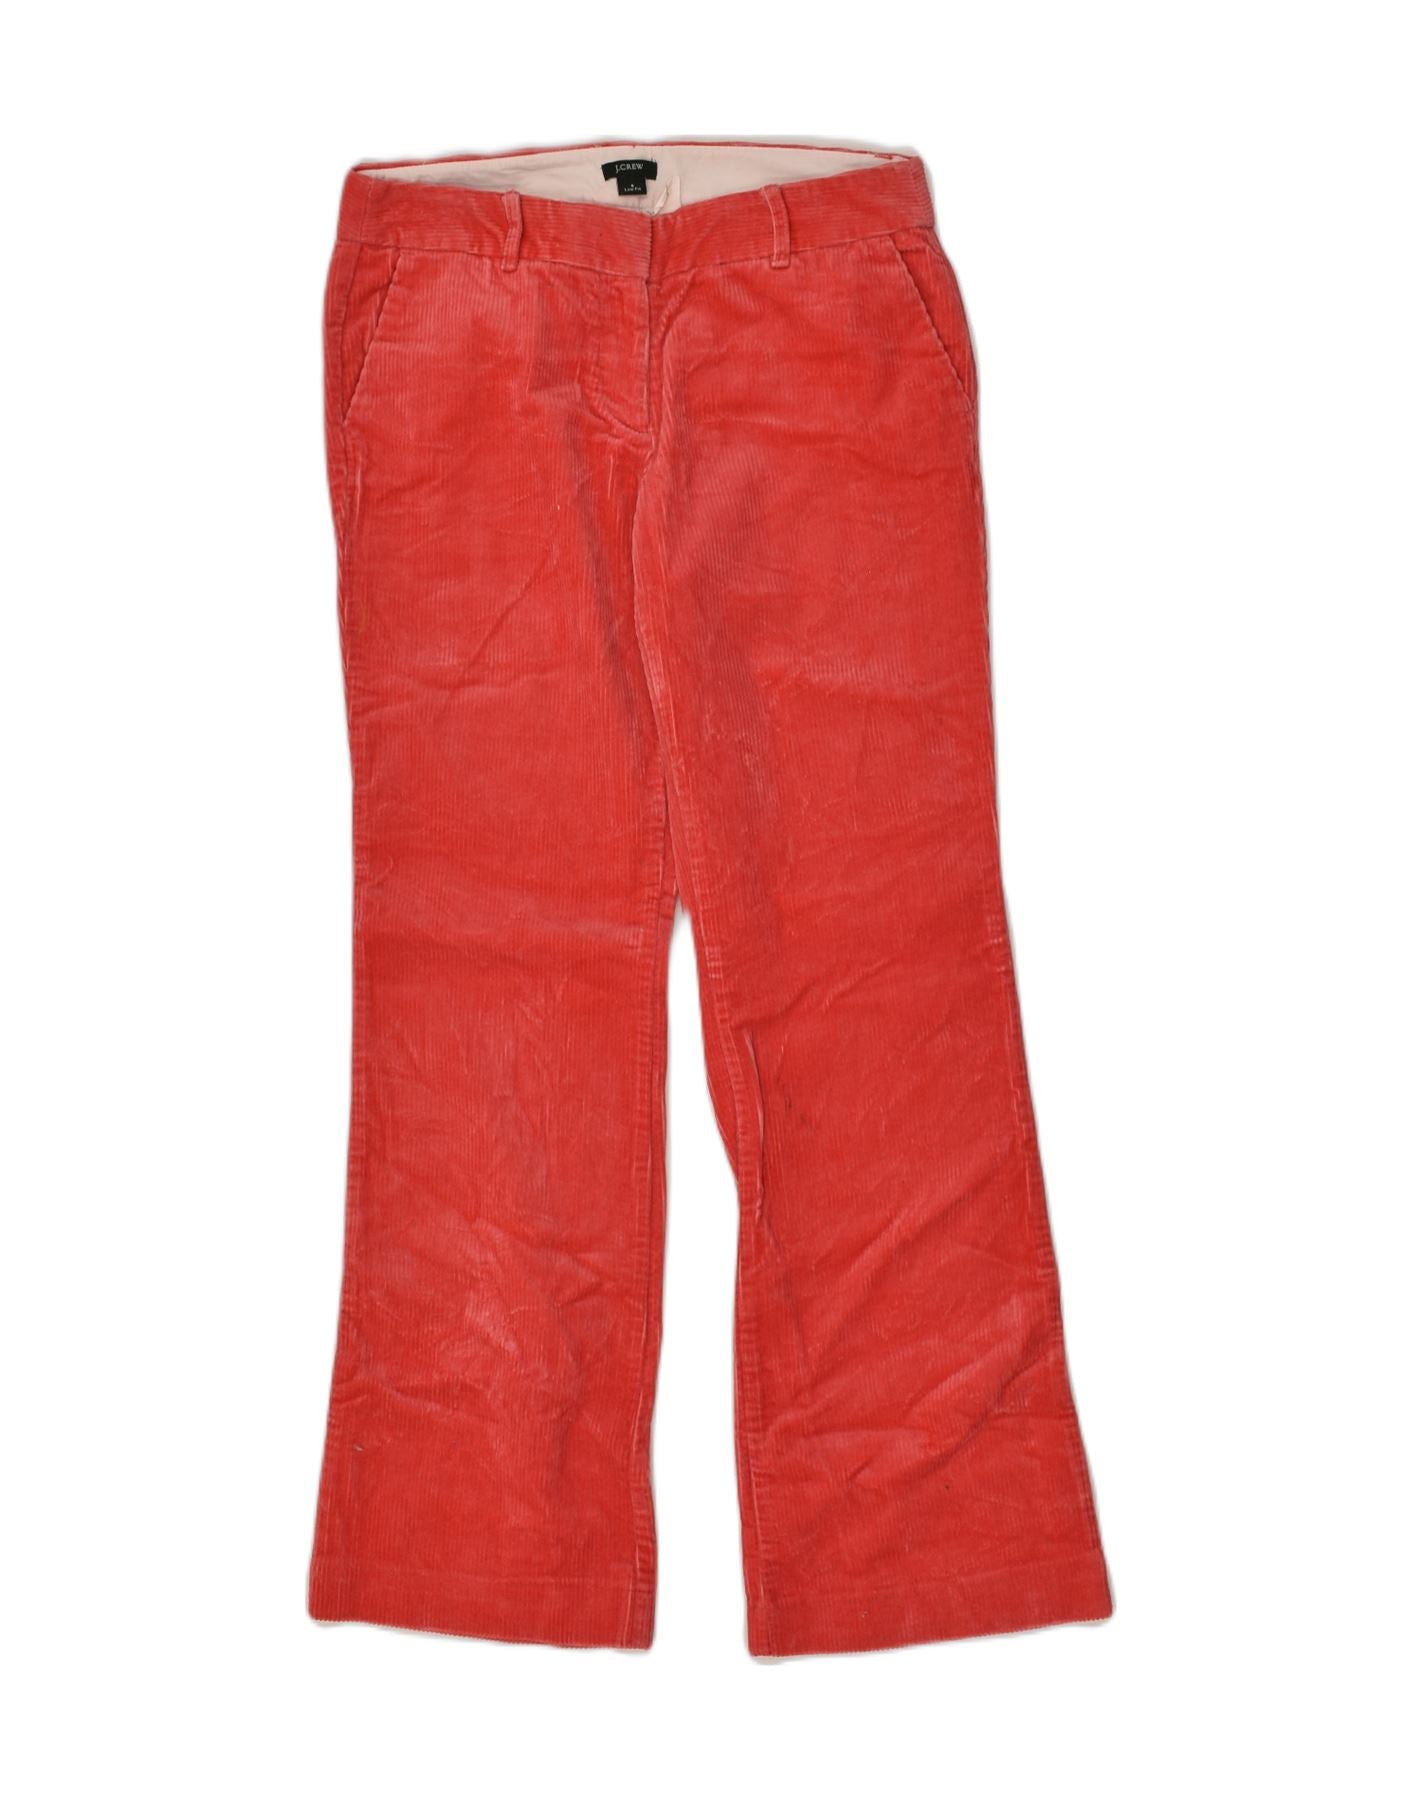 J. CREW Womens Flare Corduroy Trousers US 6 Medium W32 L30 Red